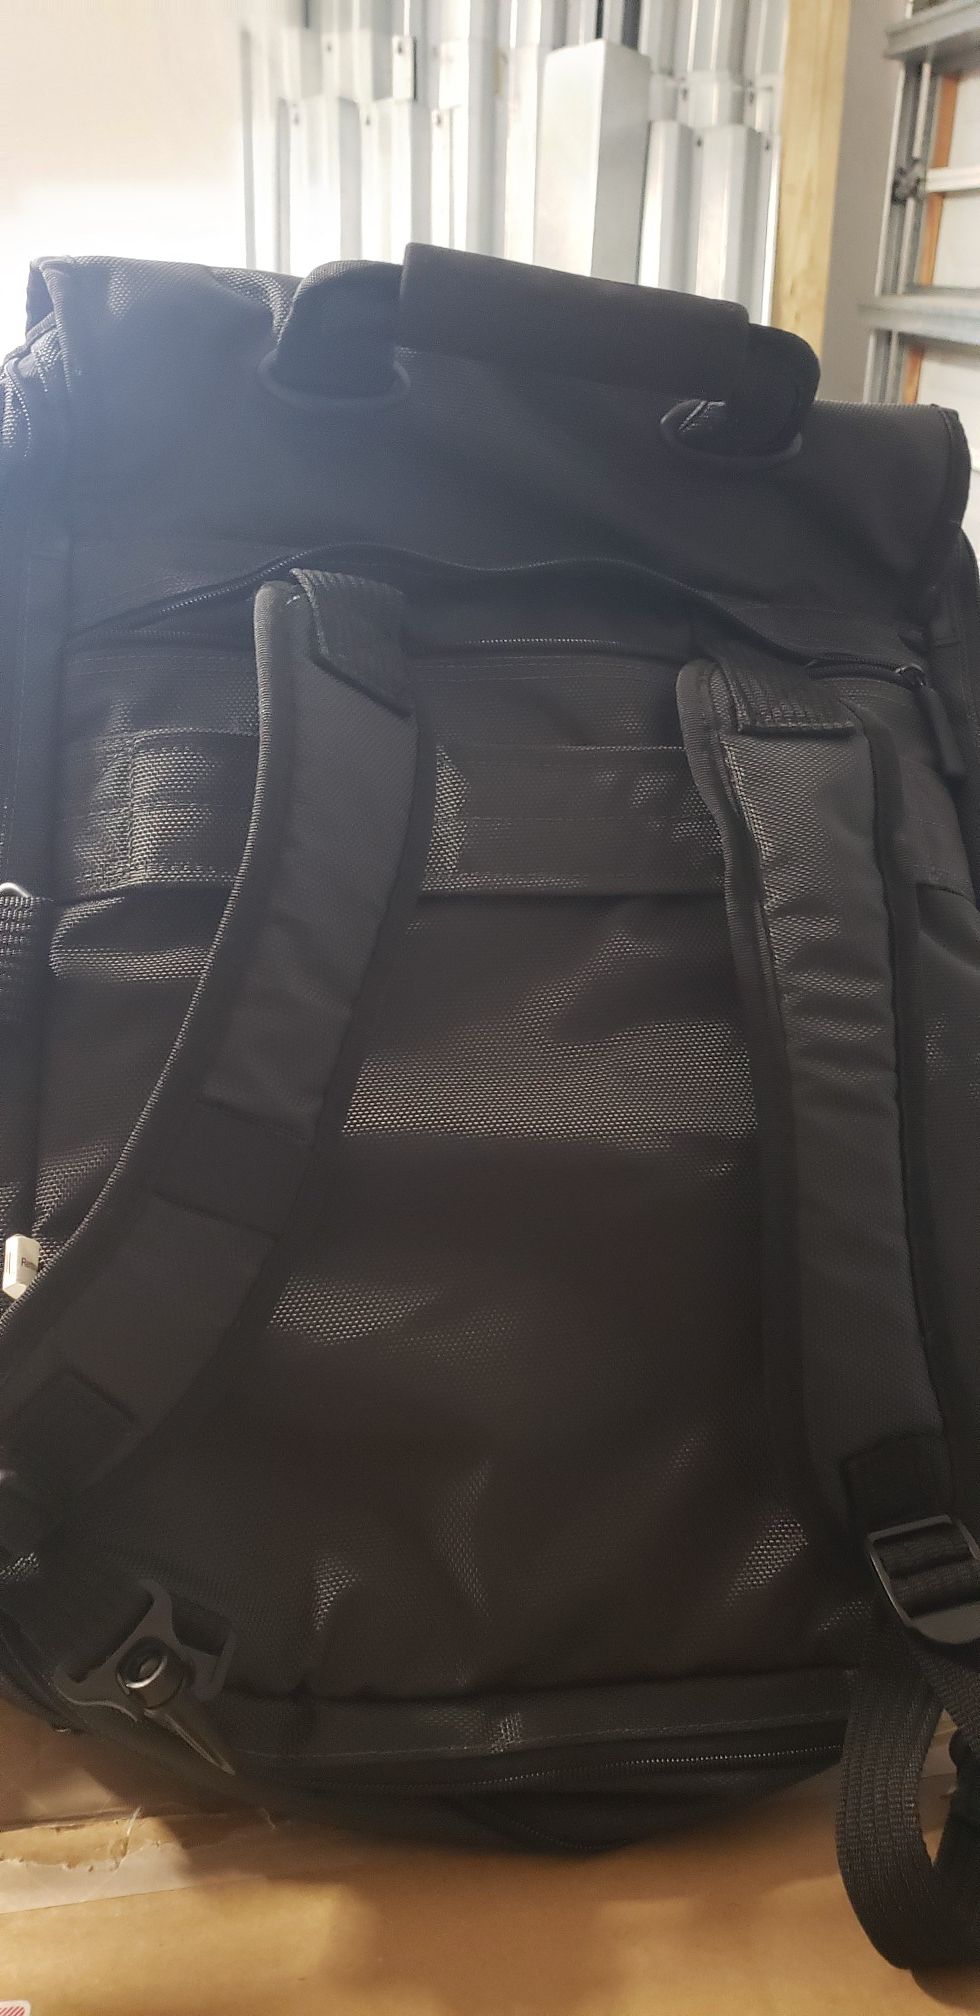 Laptop backpack carrier